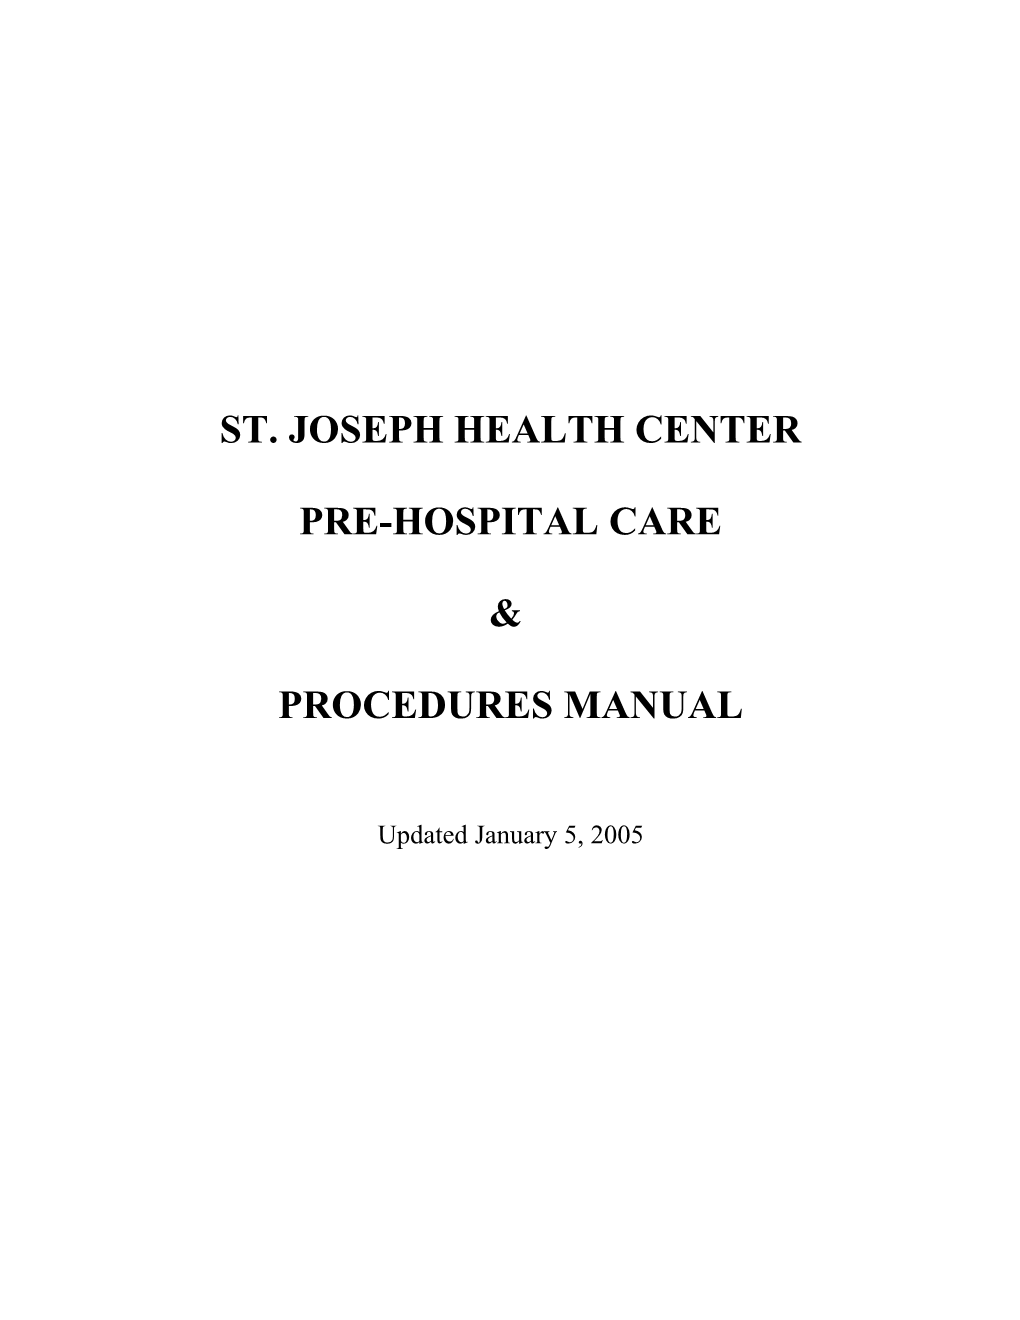 St. Joseph Health Center